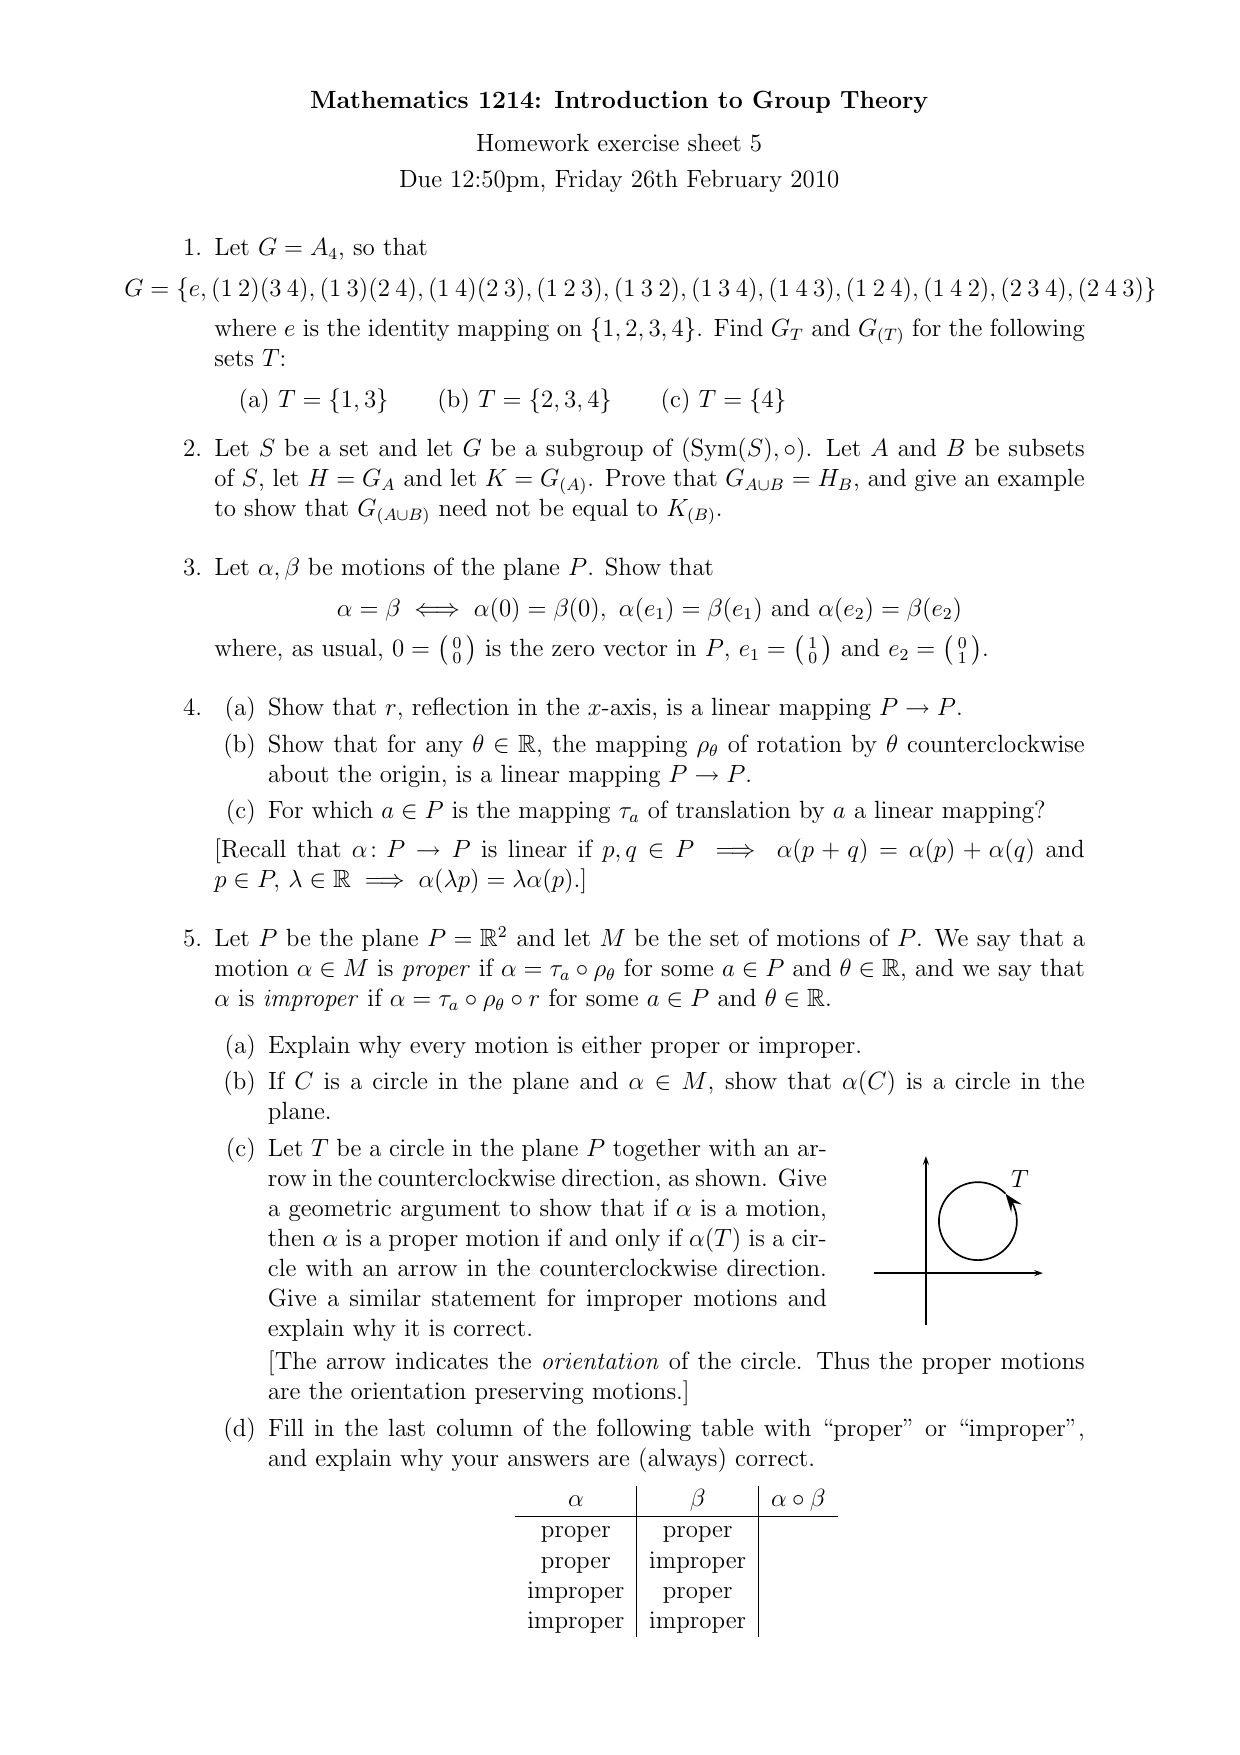 Mathematics 1214 Introduction To Group Theory Homework Exercise Sheet 5